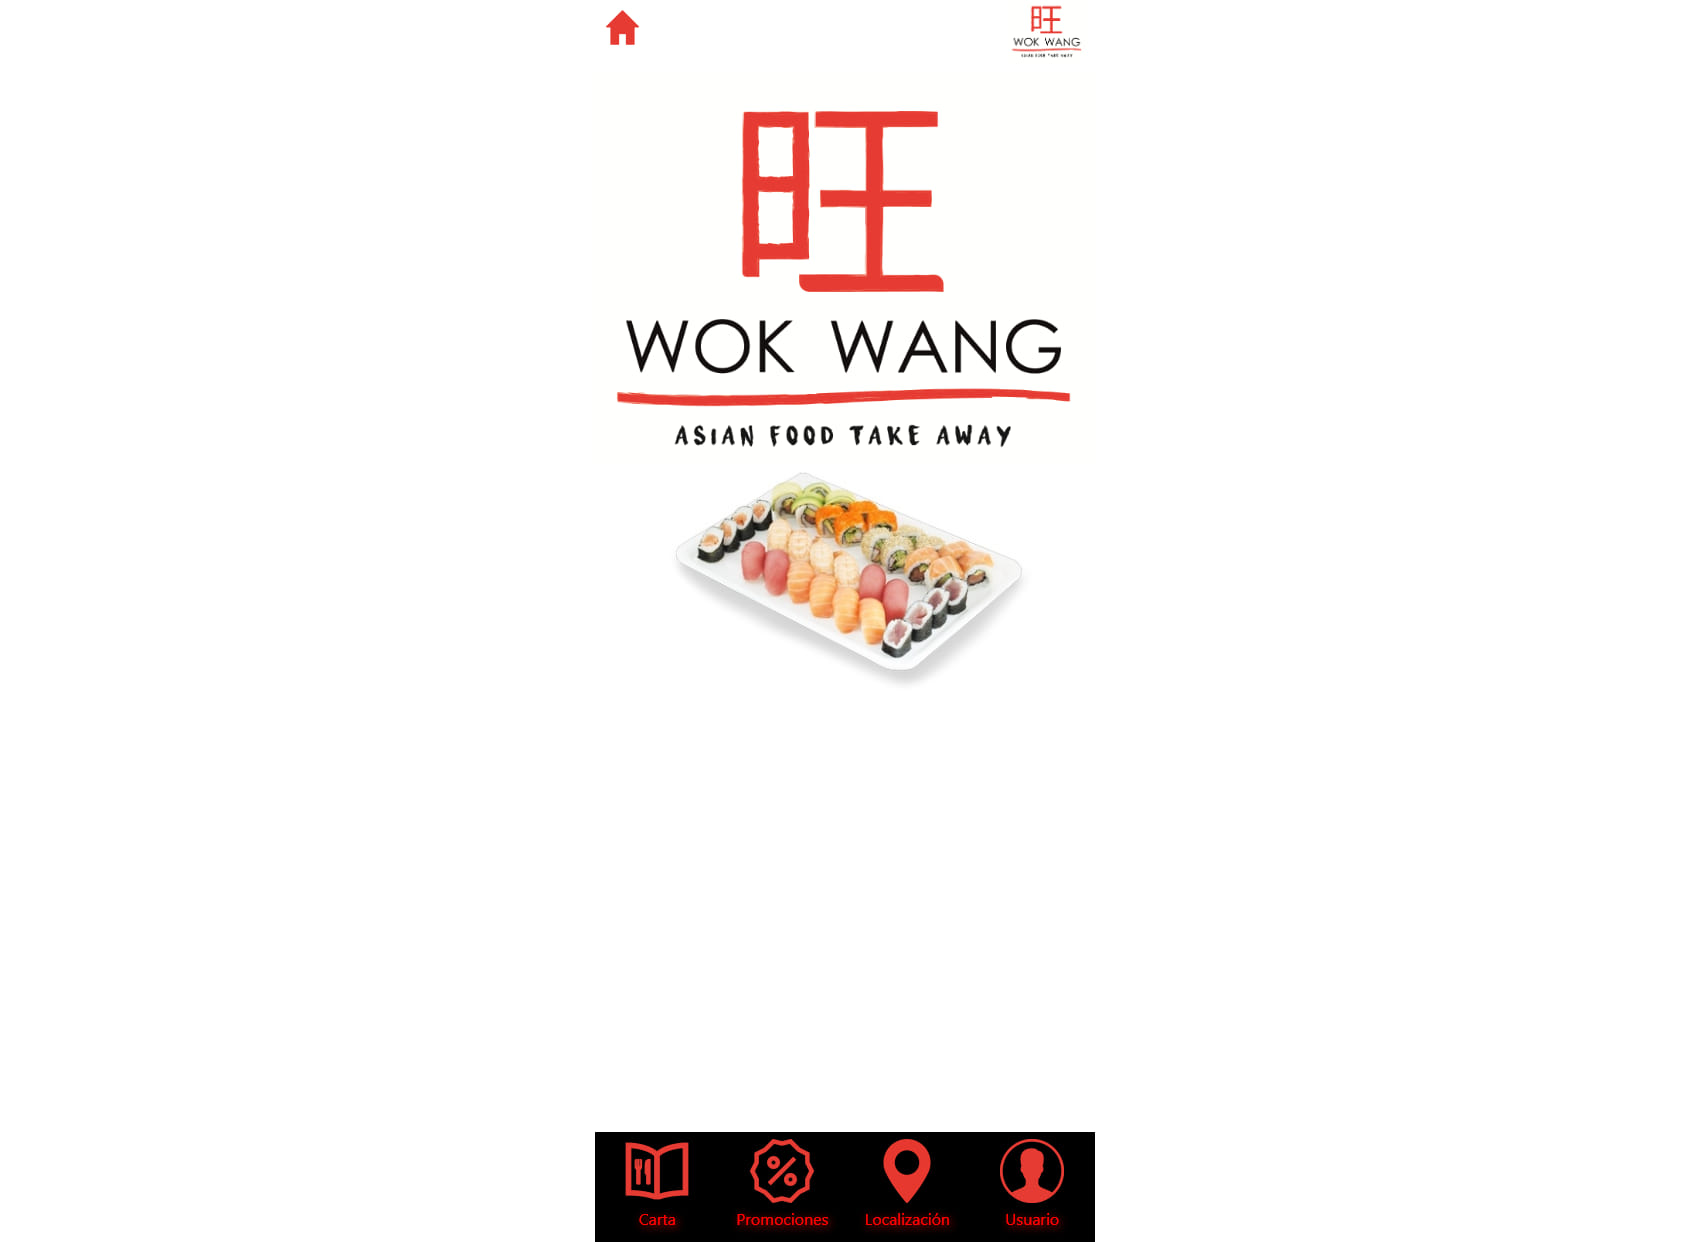 Wok Wang